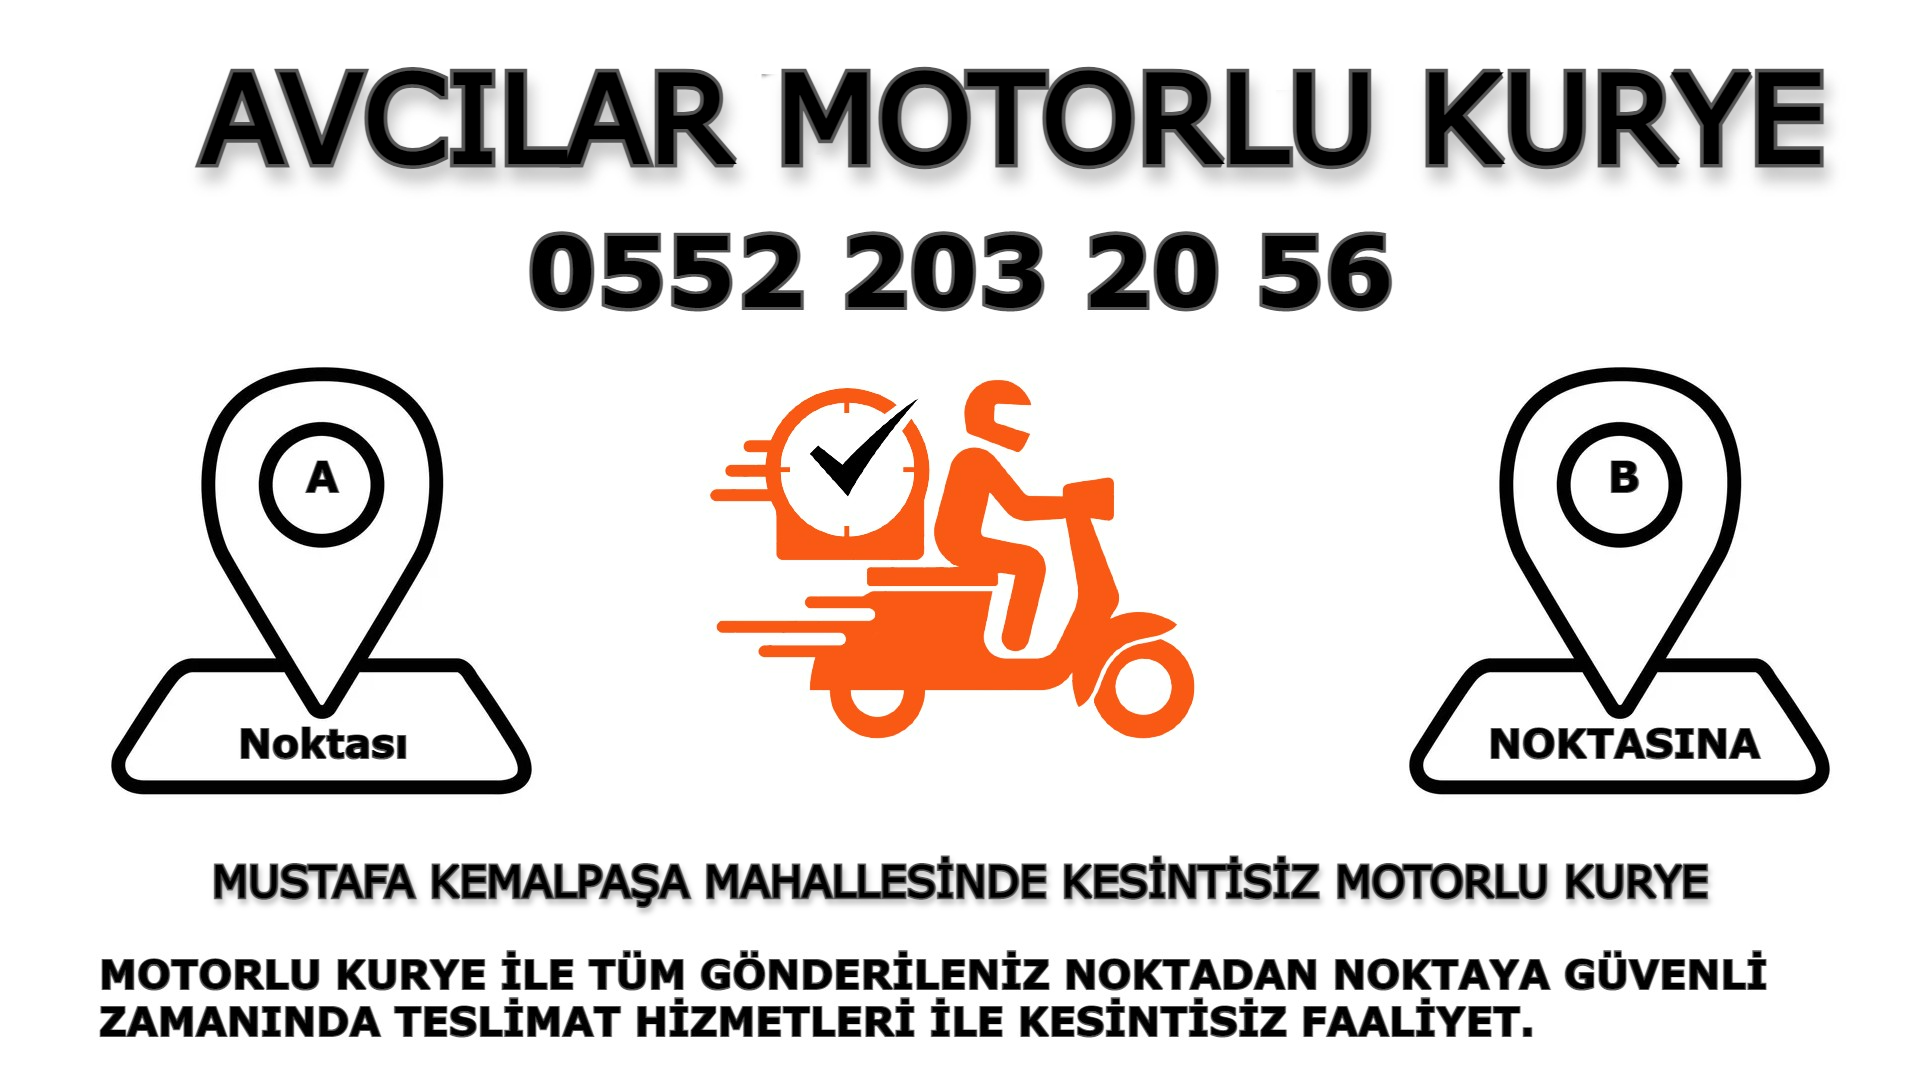 Mustafa Kemal Paşa Acil Motorlu Kurye |7/24 | 0552 203 20 56